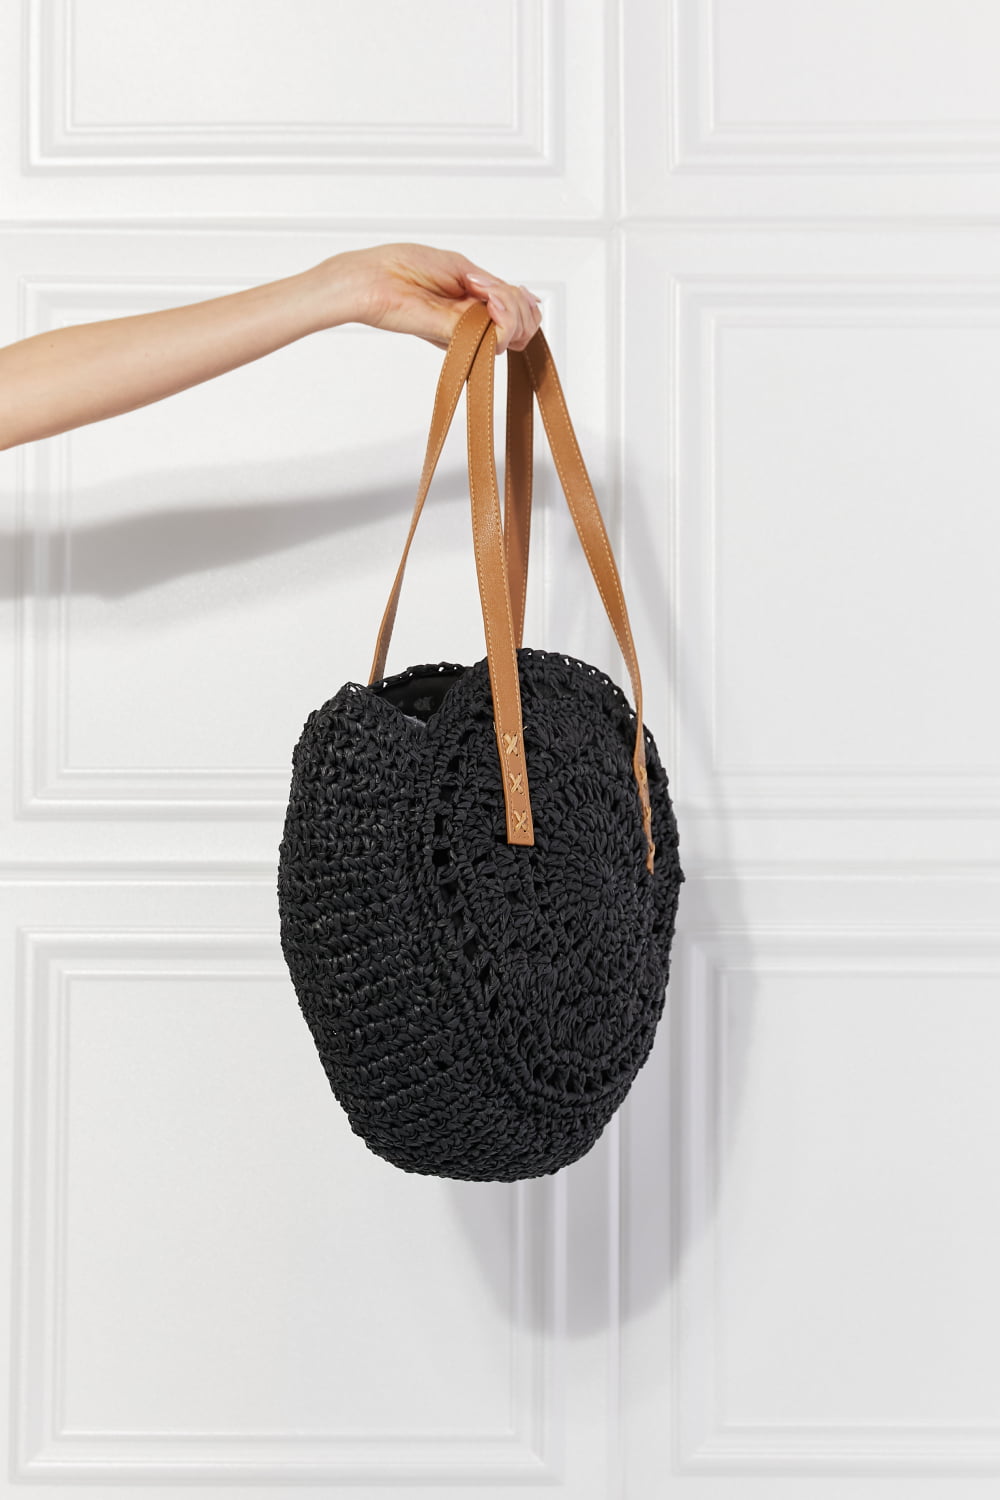 Black Justin Taylor C'est La Vie Crochet Handbag